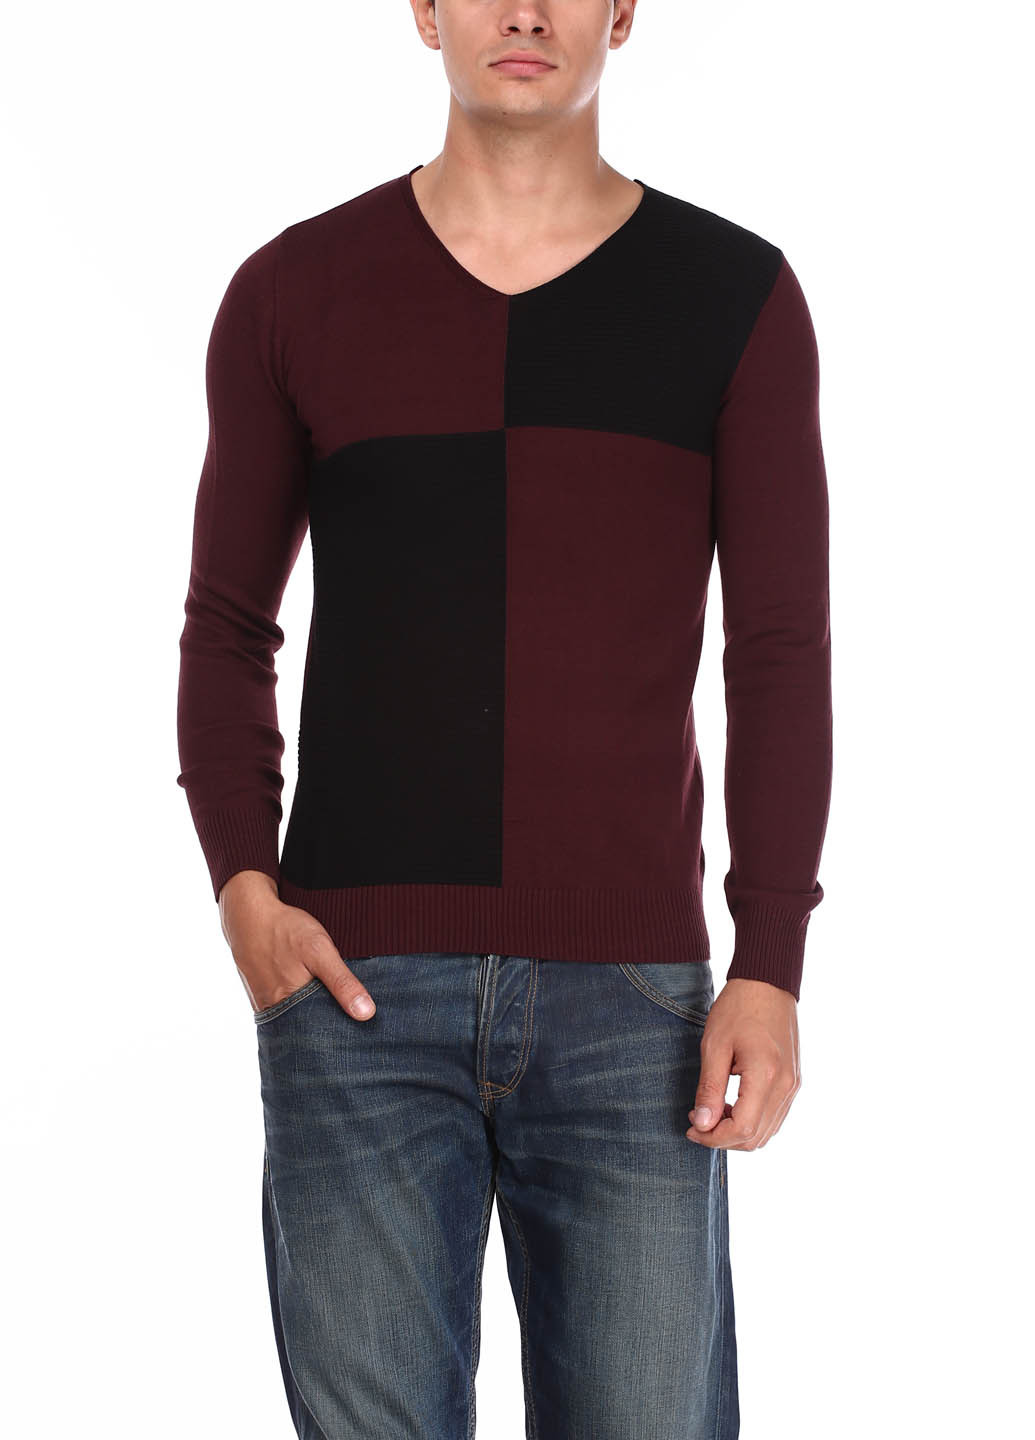 Бордовый демисезонный пуловер пуловер Le Gutti